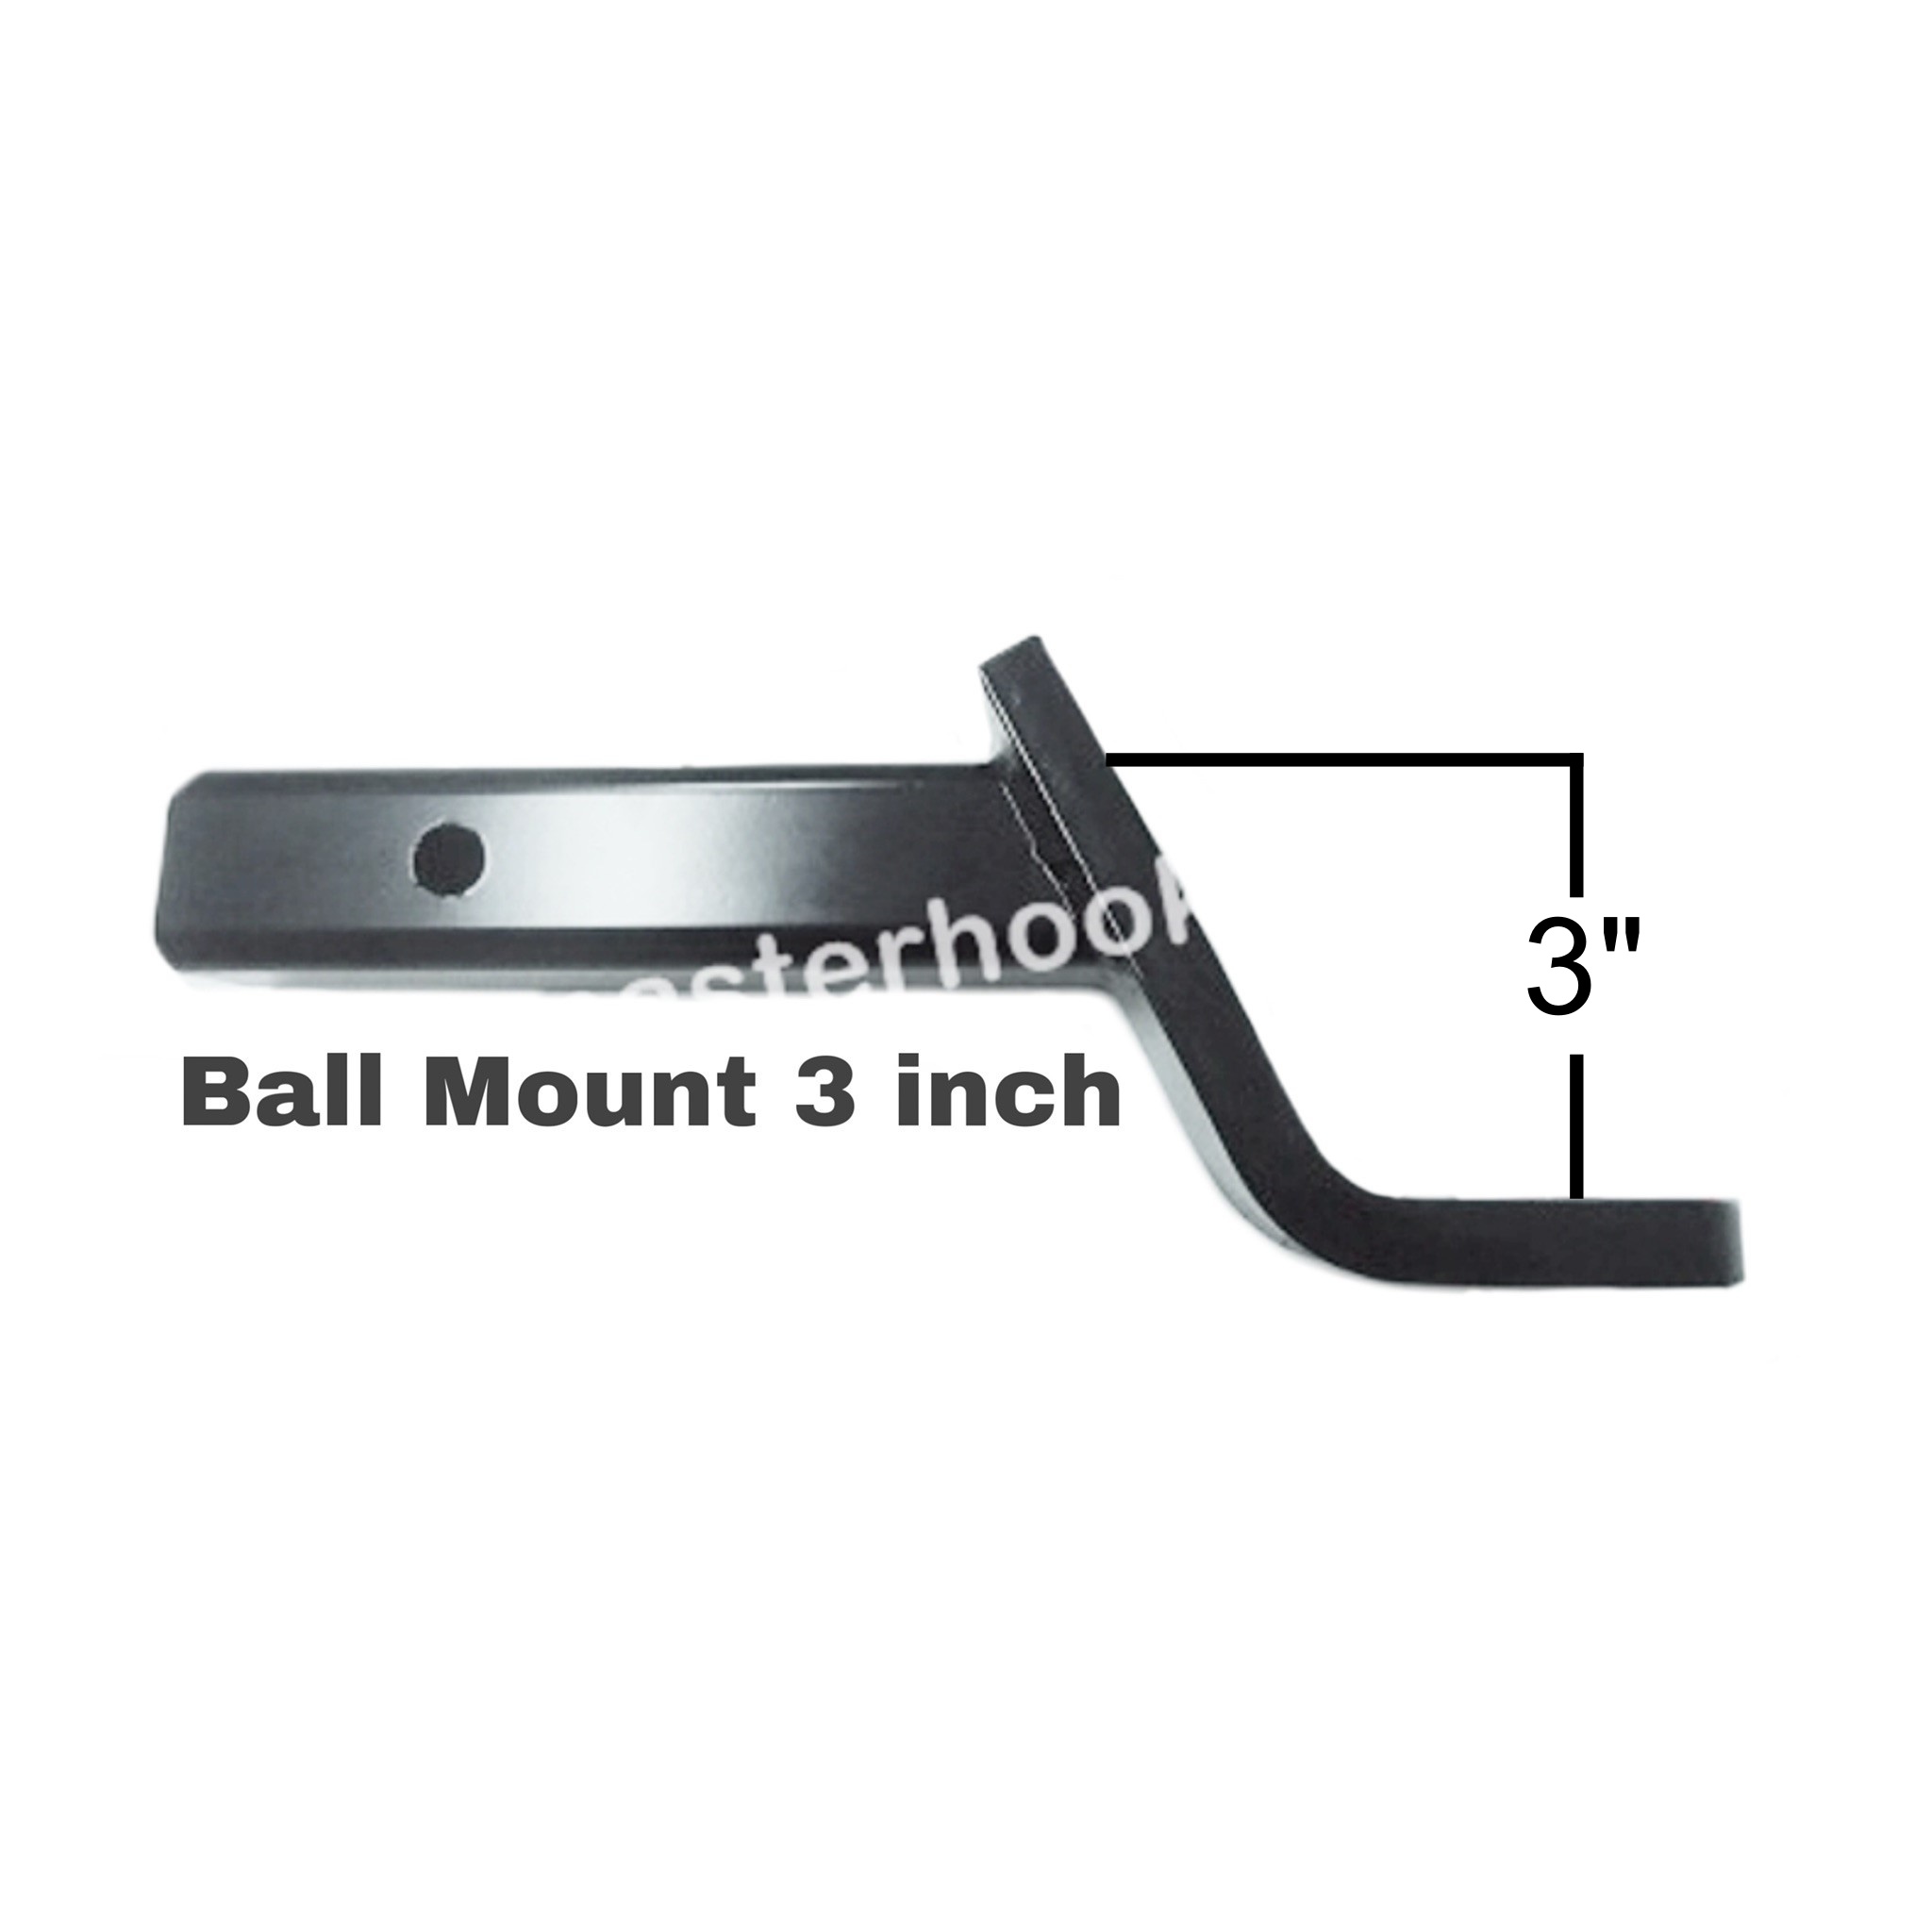 Ball Mount 3 inch